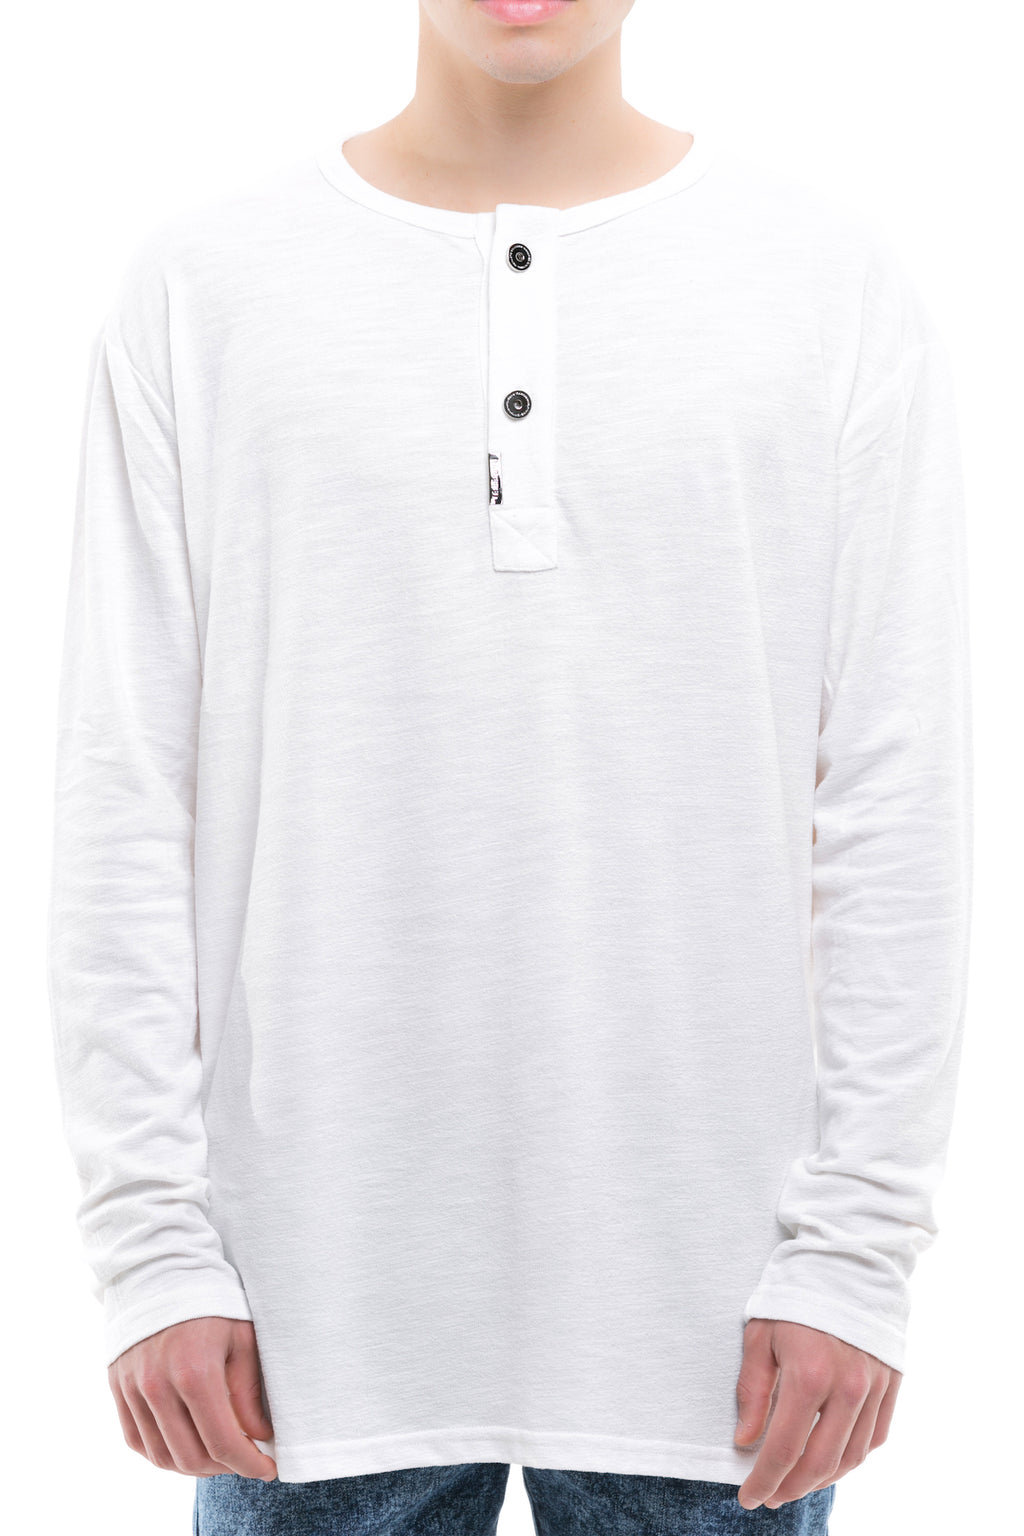 Rarefied Long Sleeve Cotton Mixed Blend T-Shirt - Detailed View